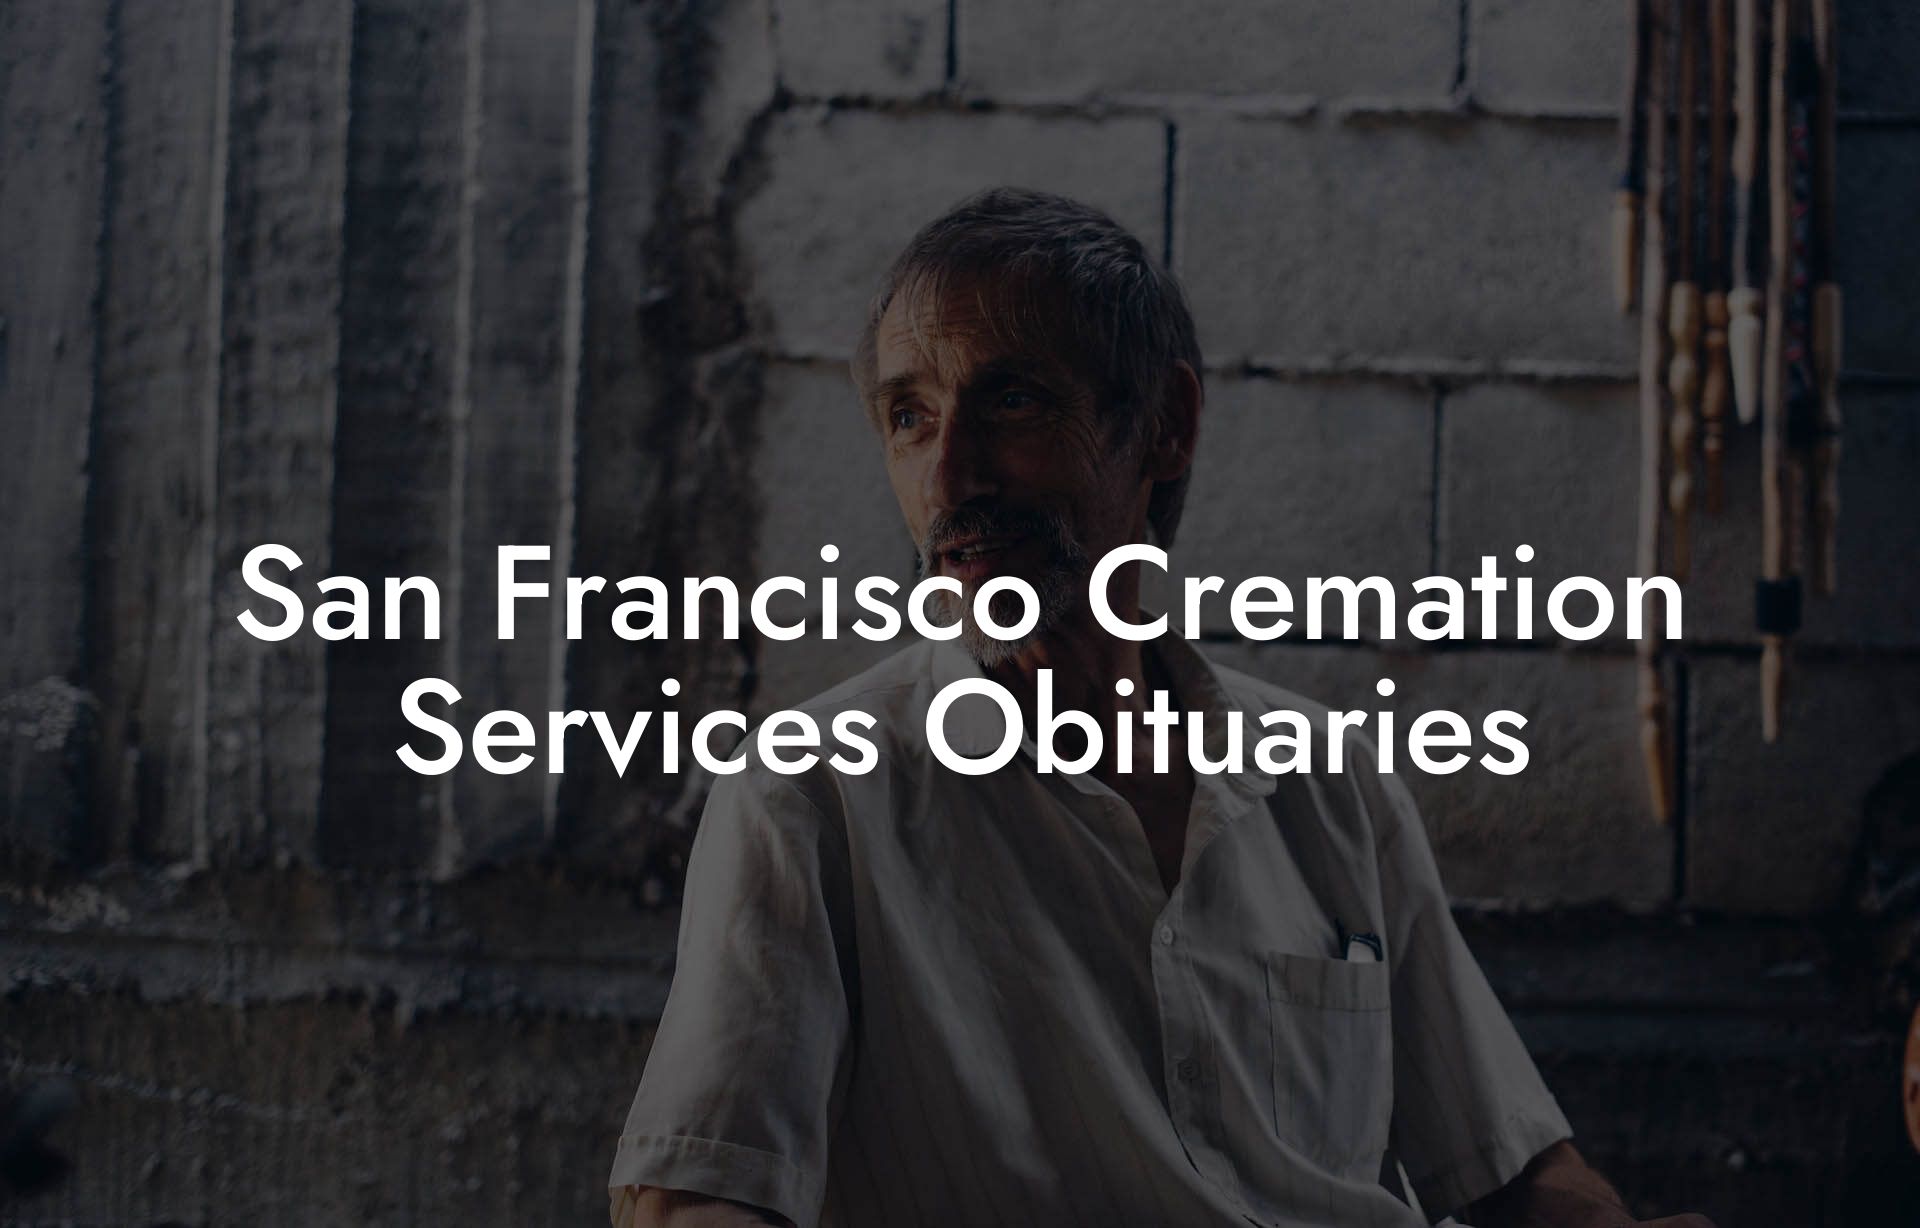 San Francisco Cremation Services Obituaries